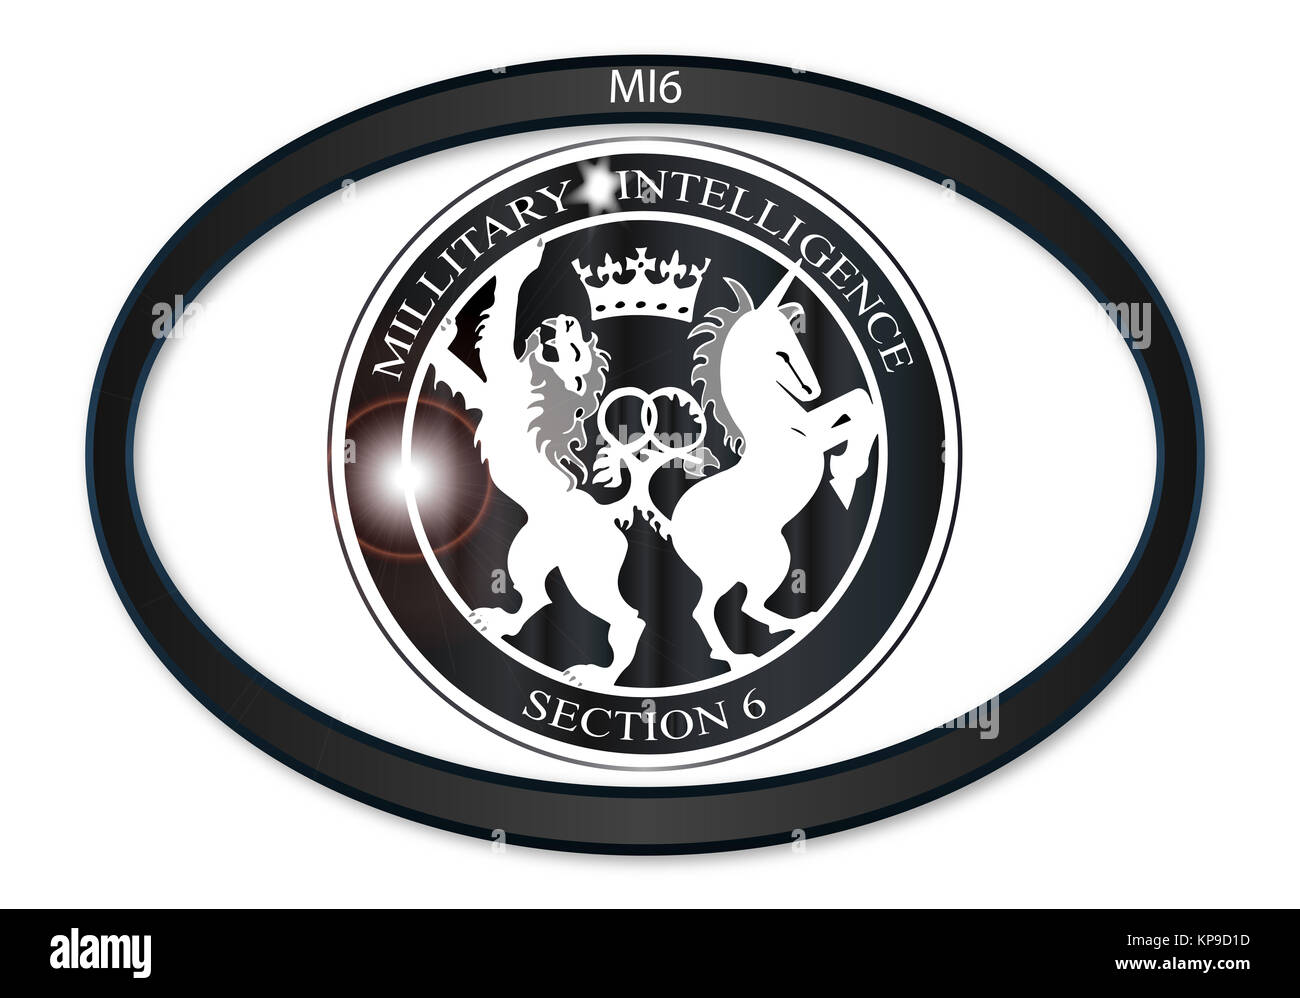 MI6 Oval Badge Stock Photo